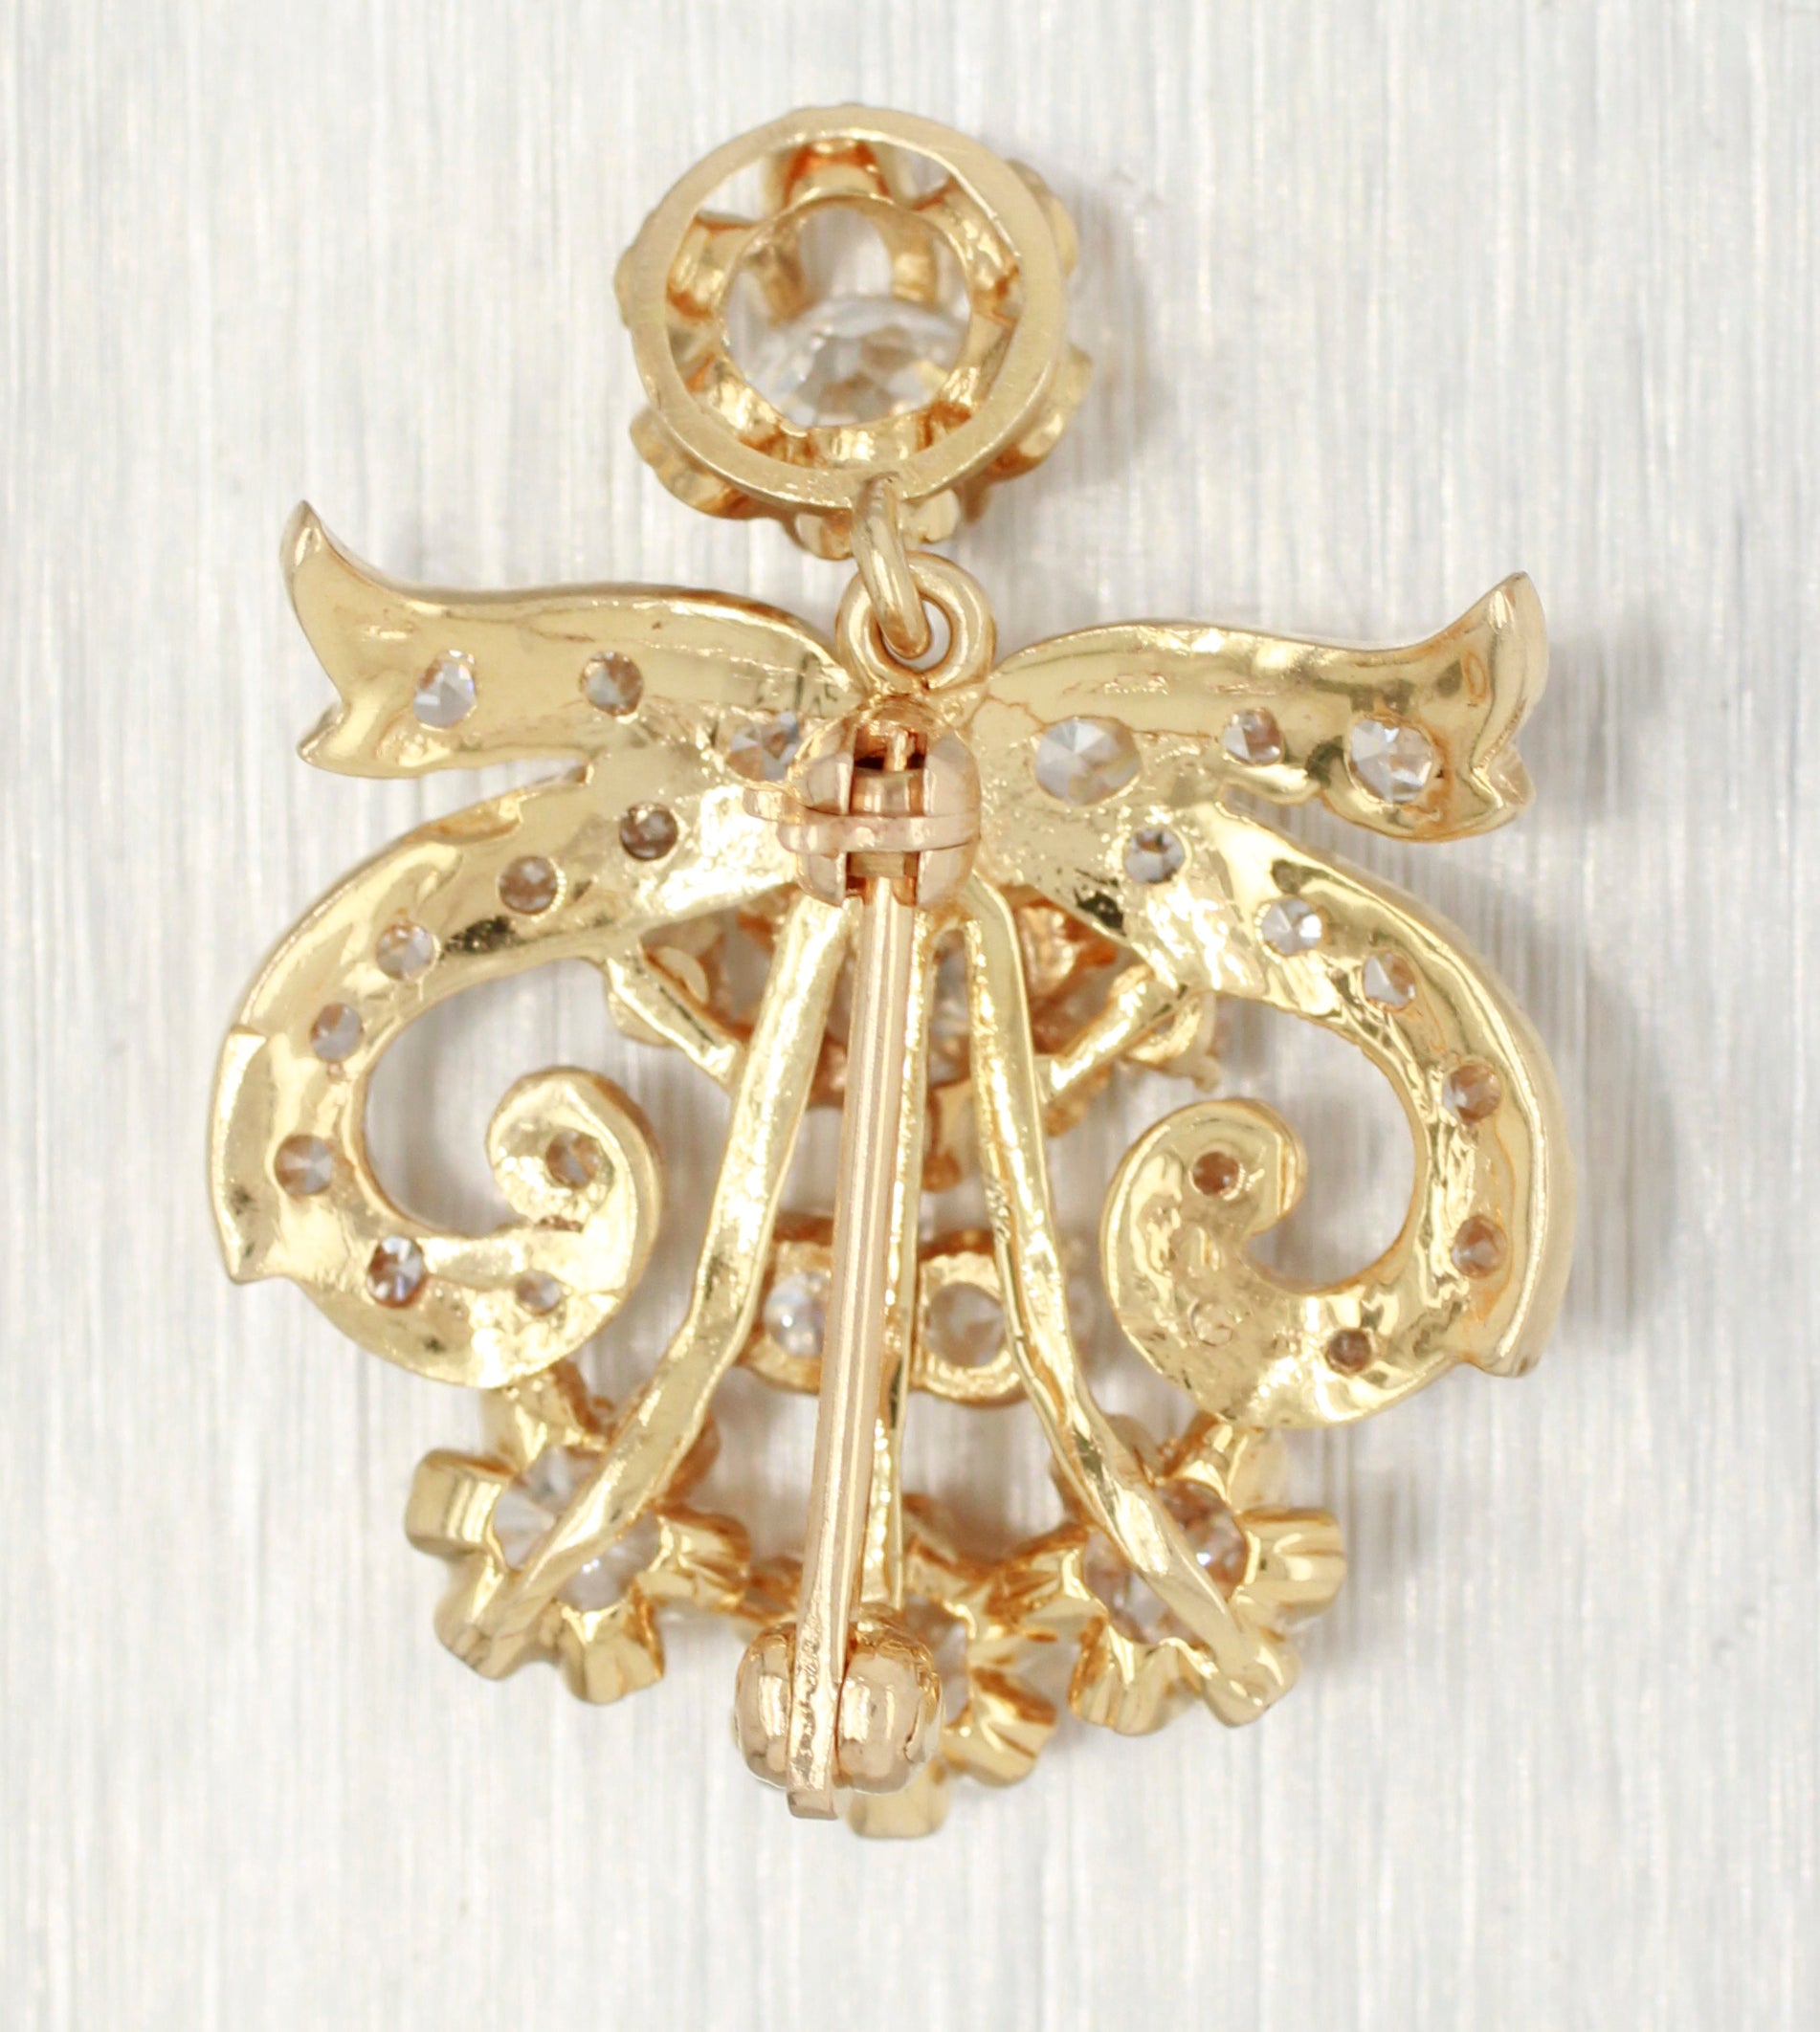 Antique Art Deco 1ctw Old Mine Cut Diamond Swirled Brooch Pin - 14k Yellow Gold